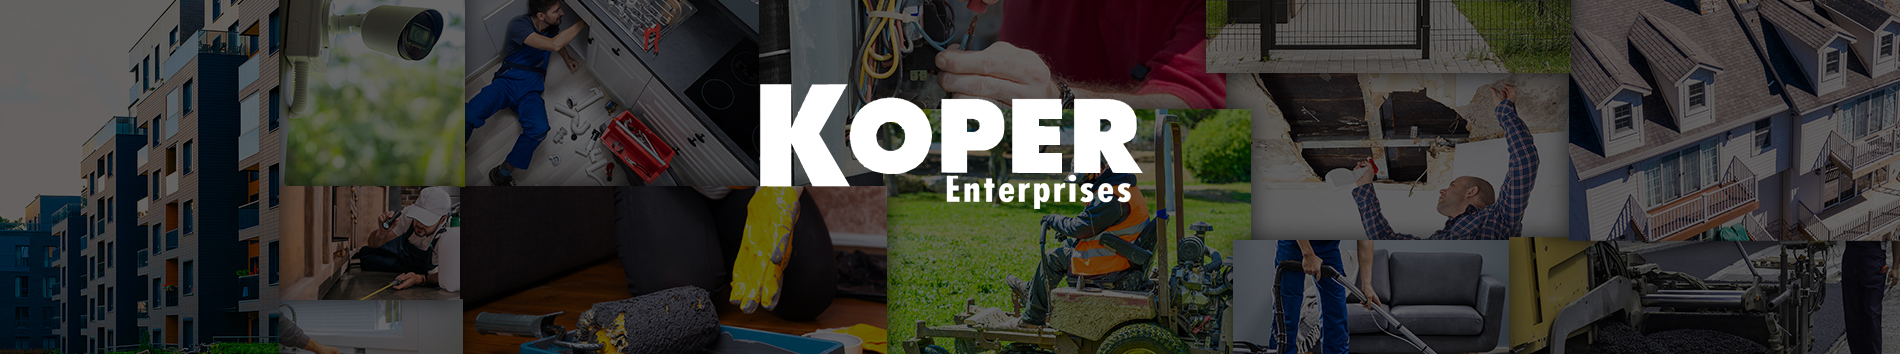 Koper Enterprises